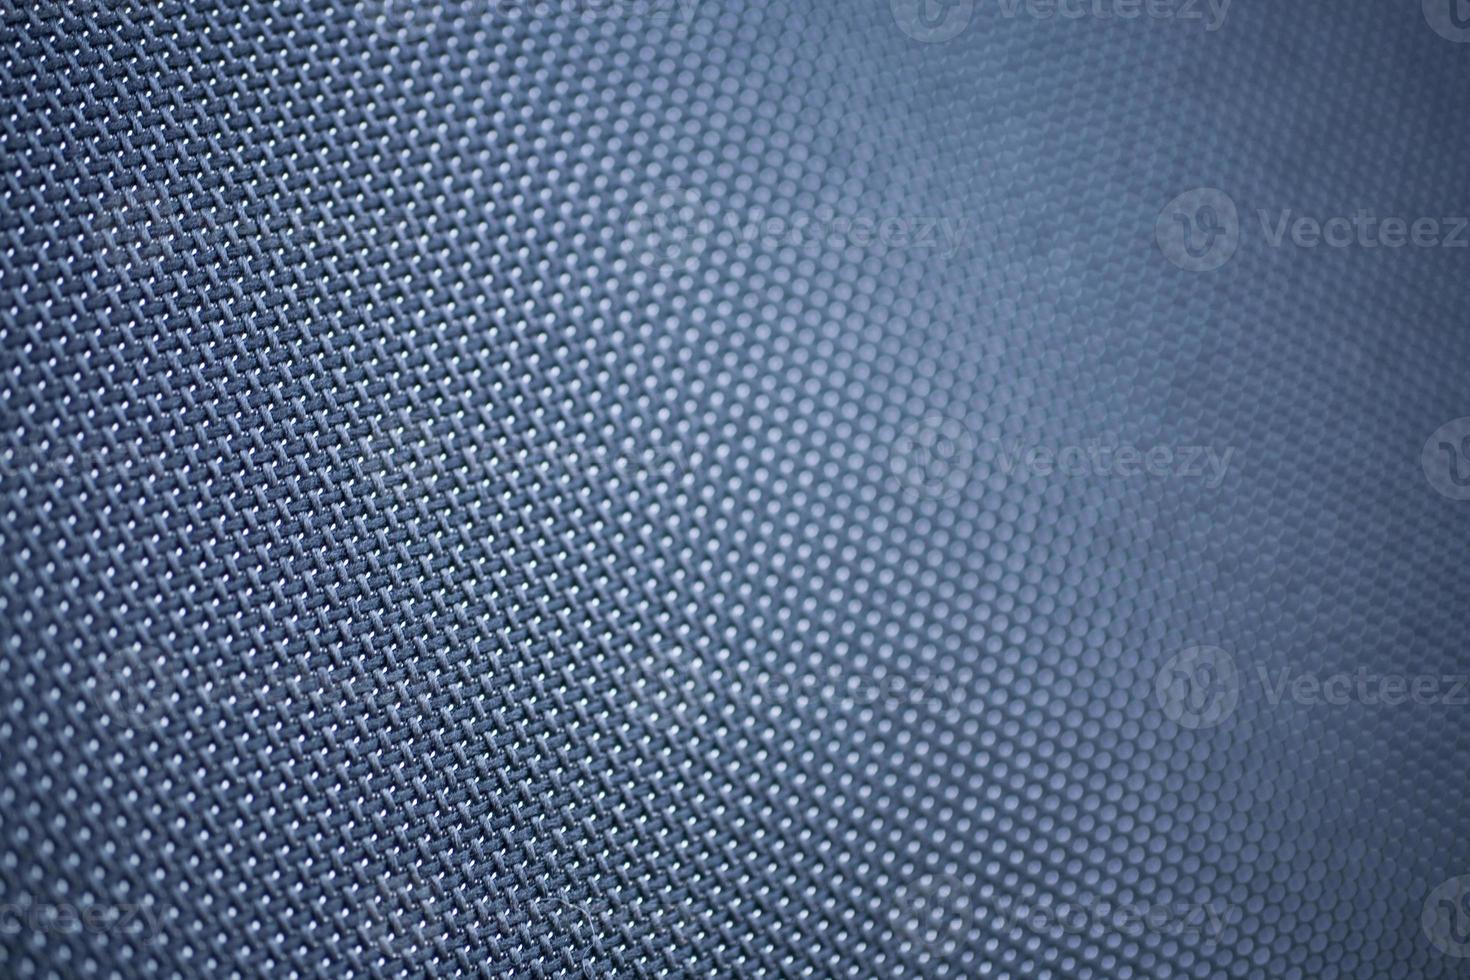 fondo azul textil foto